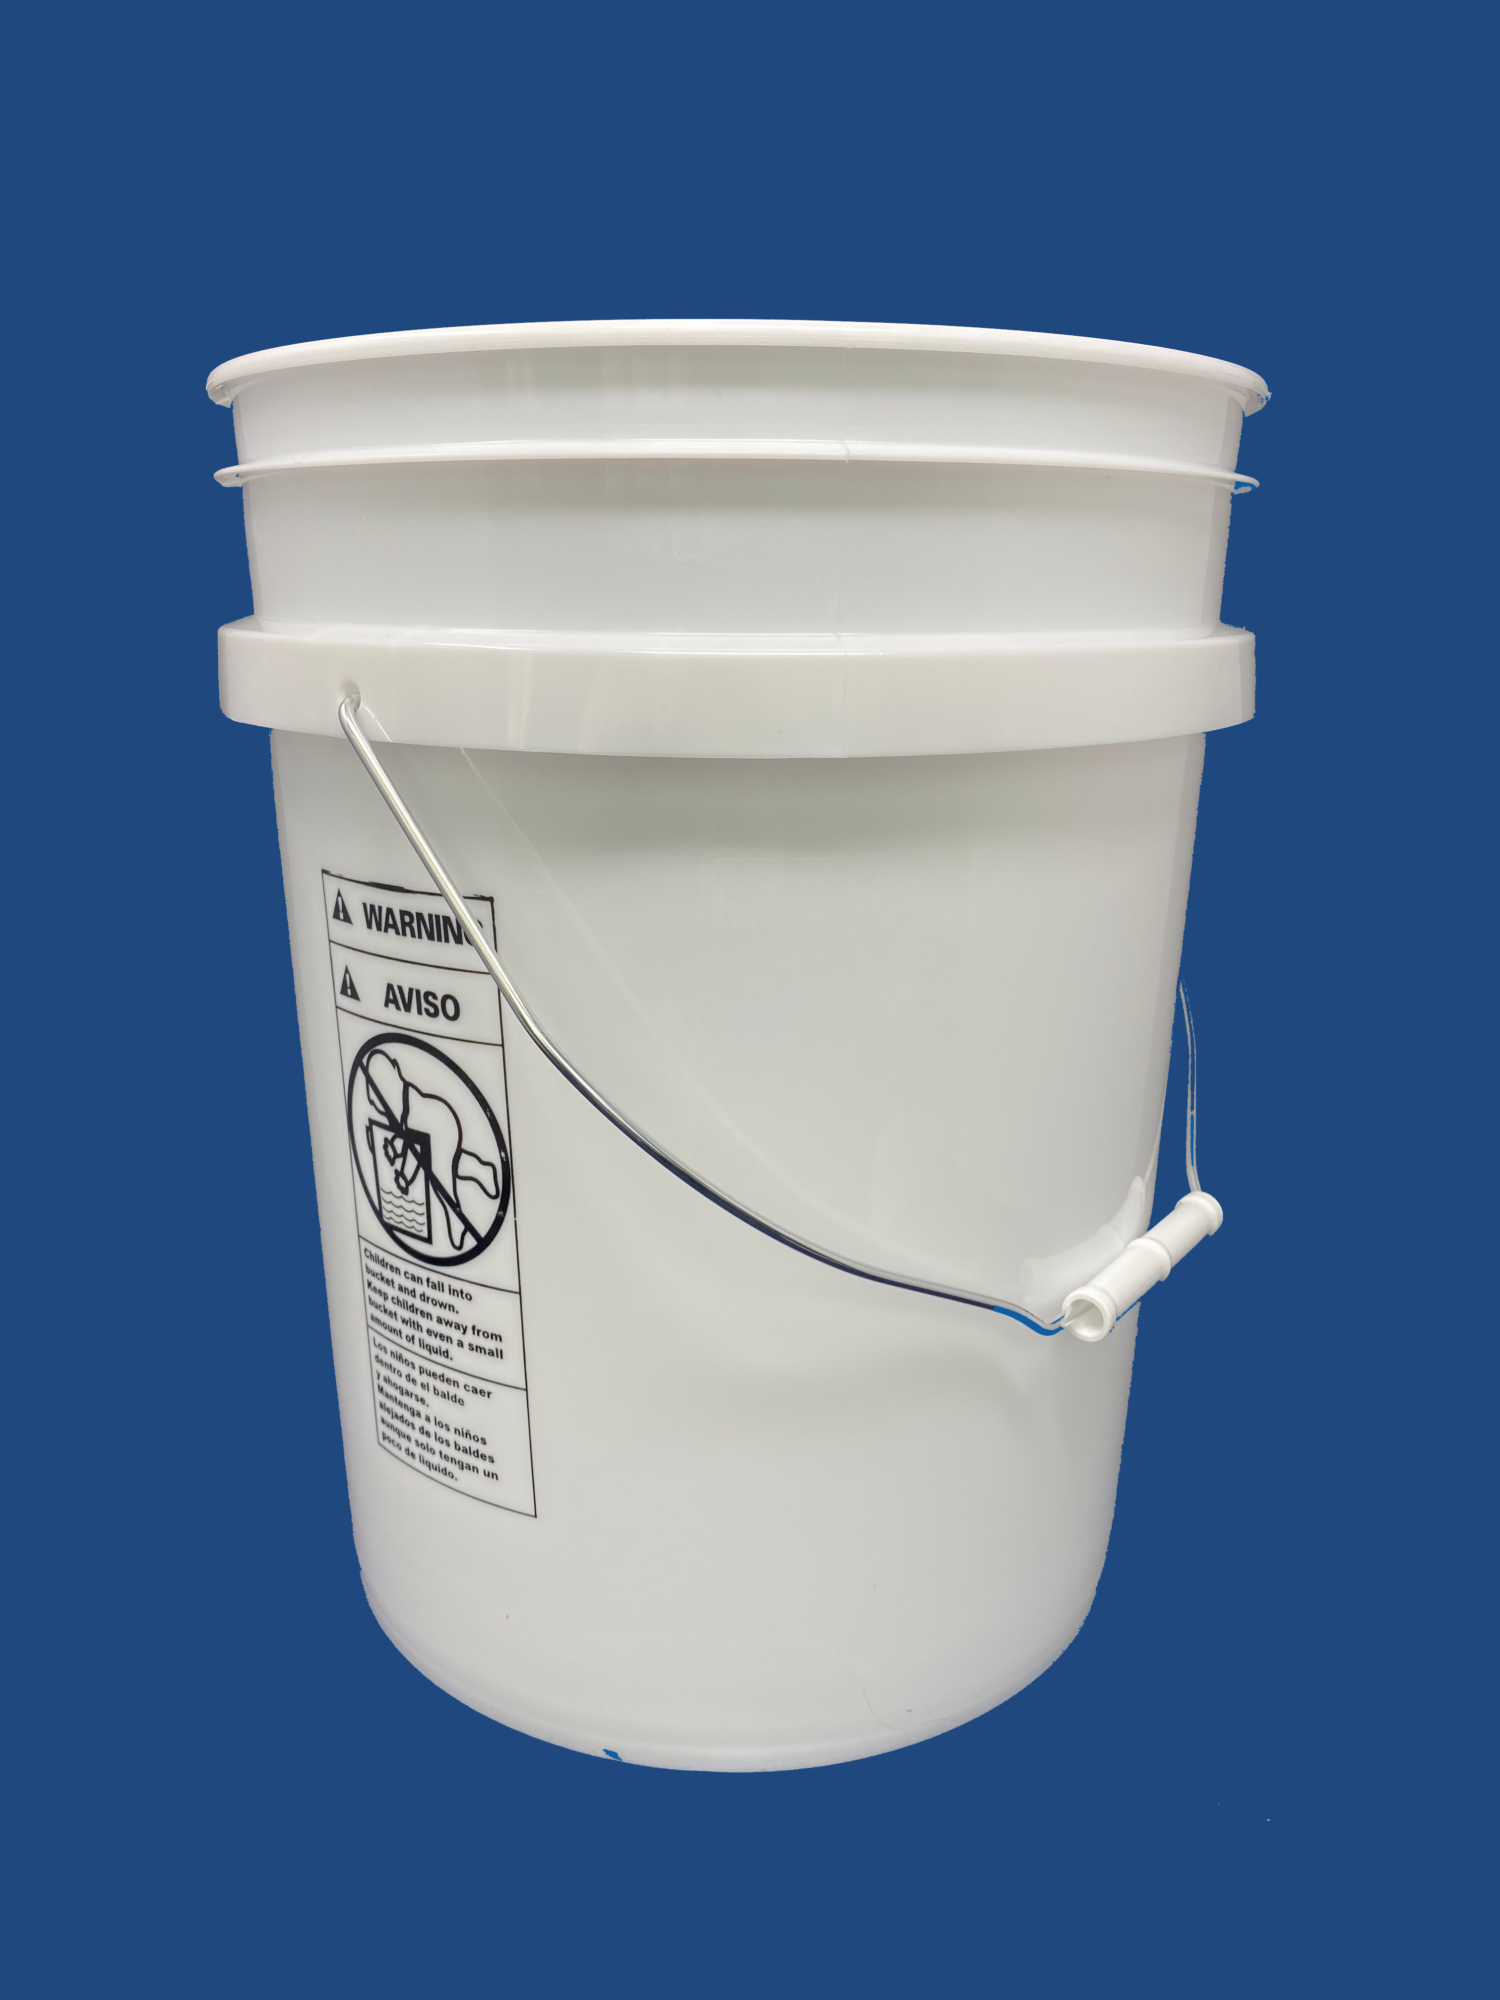 The Dead On Plastix 5 gallon buckets up - Angling A.I. llc